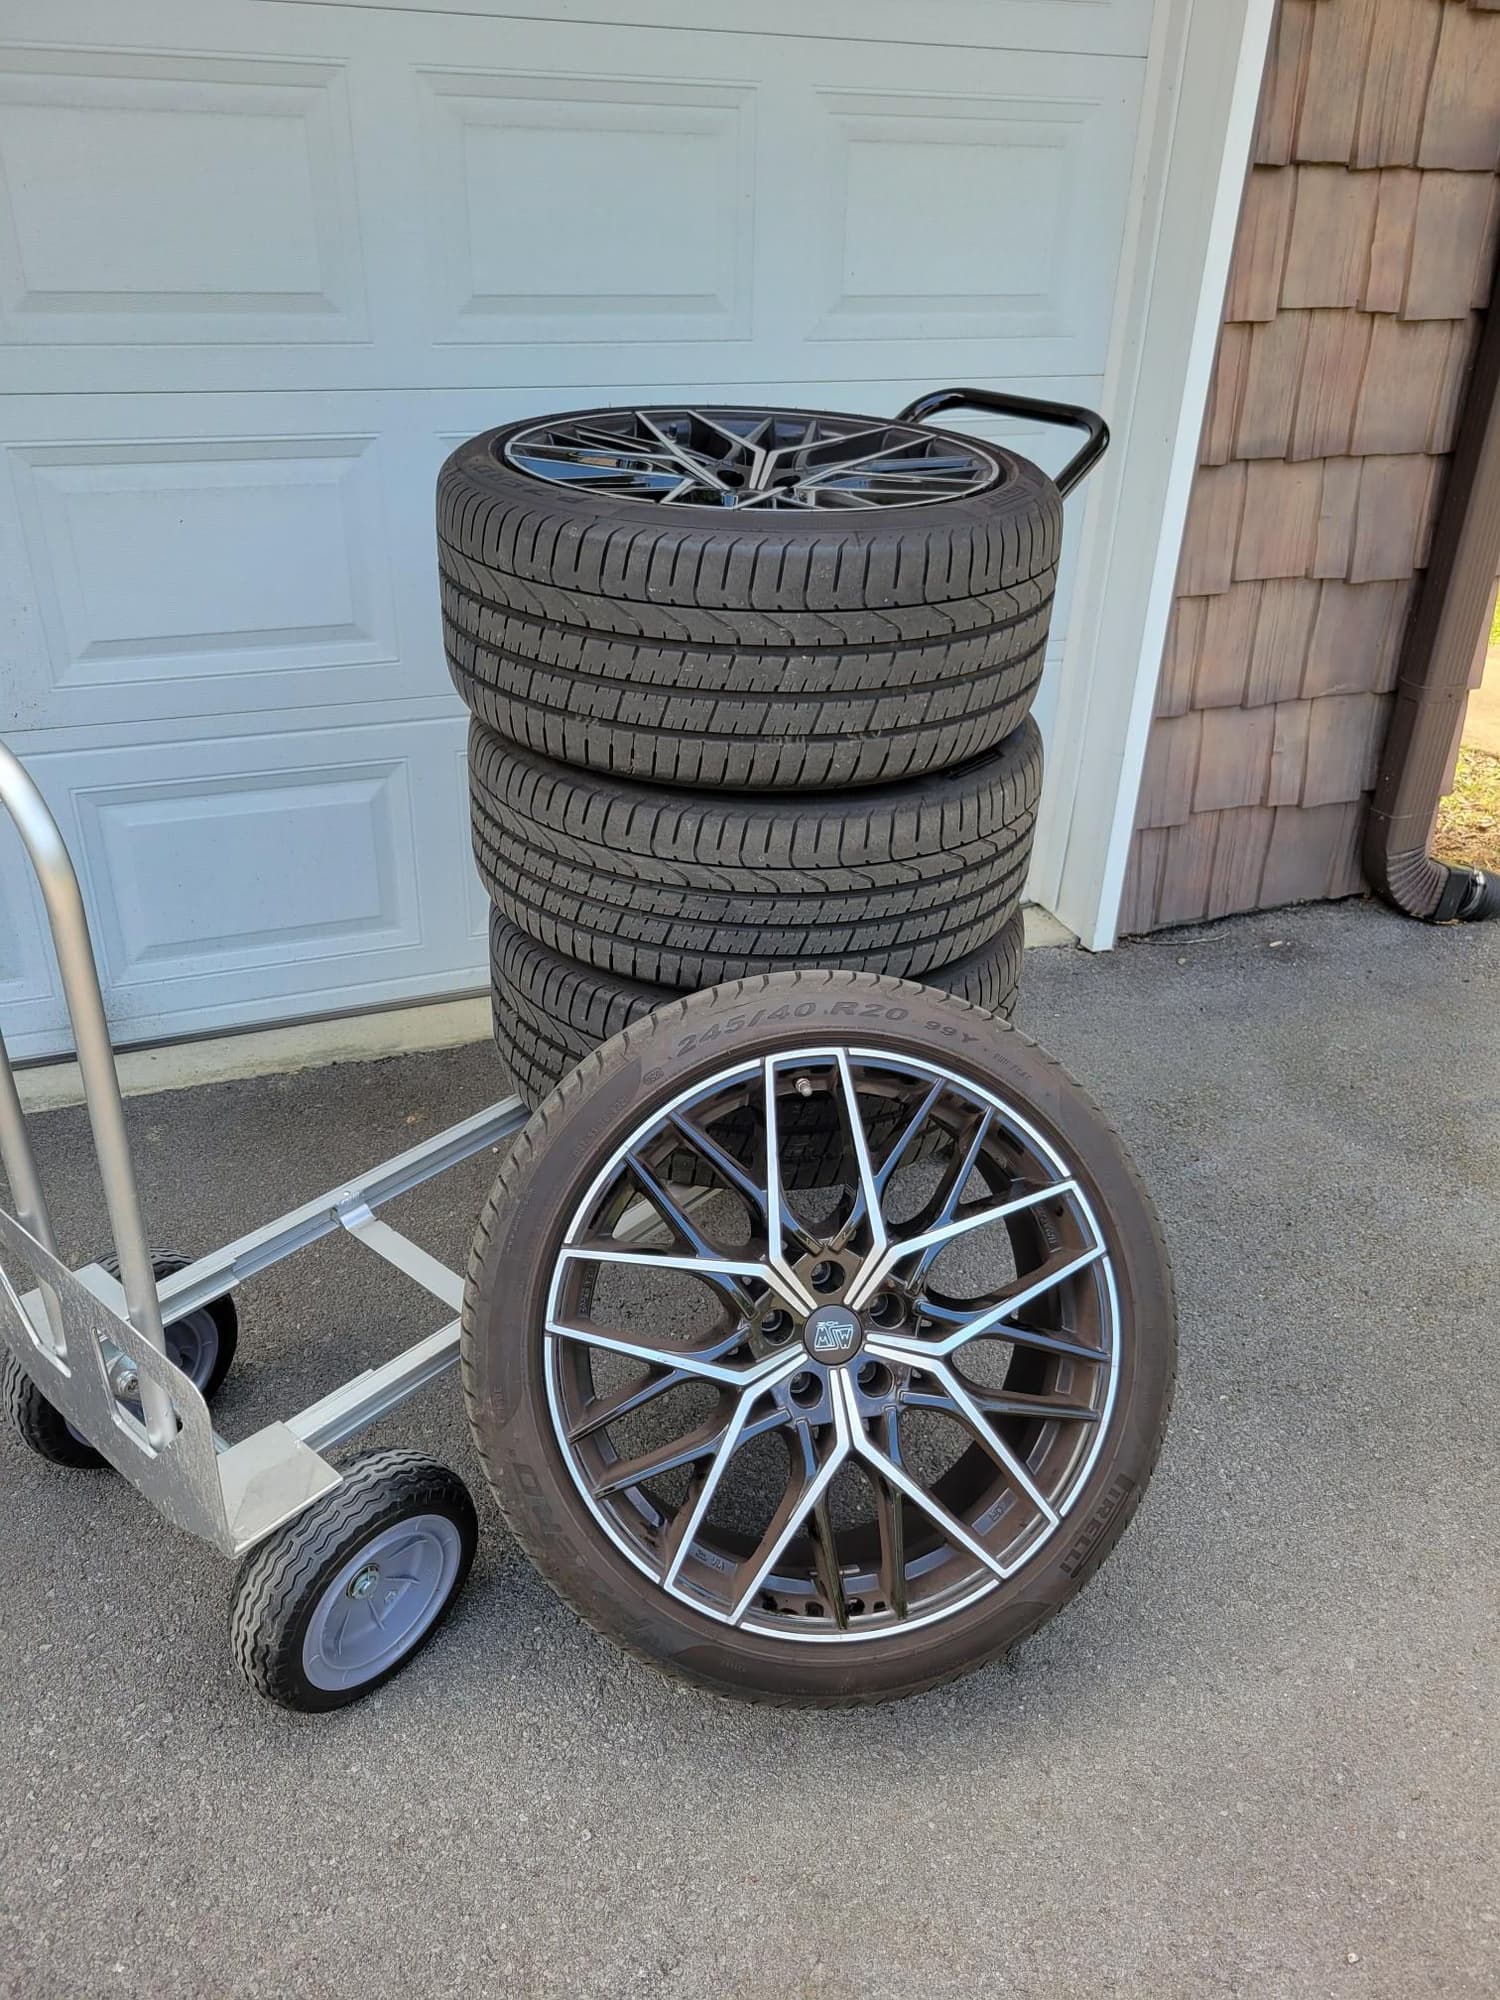 Wheels and Tires/Axles - Pirelli PZero Run Flat Tires - Used - 2014 to 2020 Mercedes-Benz S550 - Leesburg, AL 35983, United States